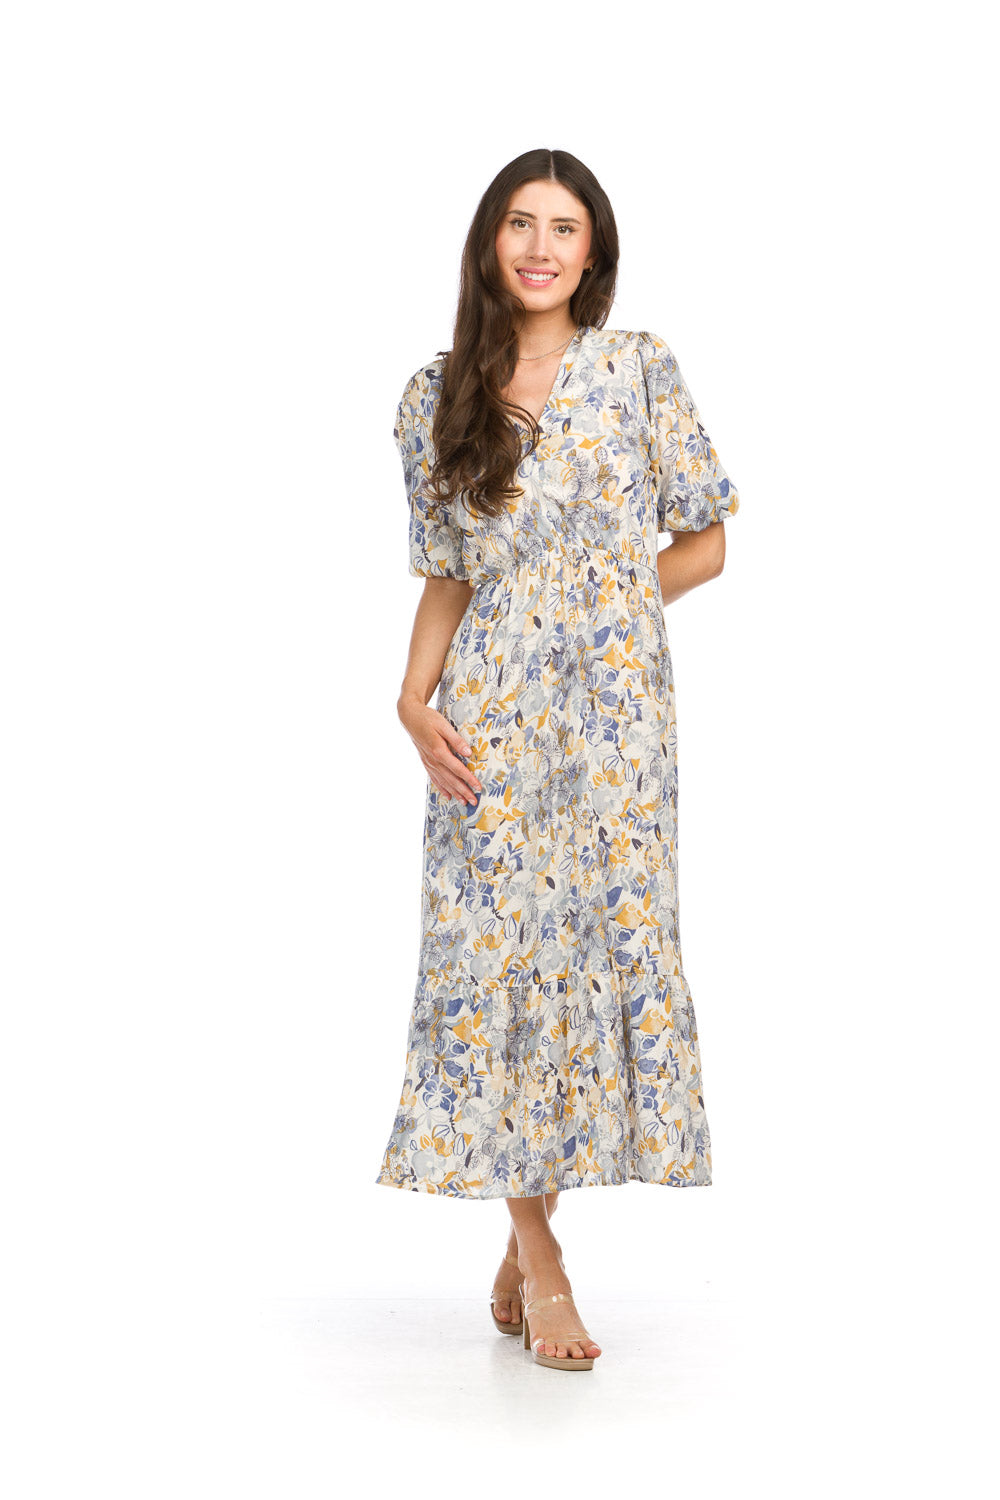 PD16704 BLUE Floral Print 3/4 Sleeve Maxi Dress w ruffle Trim